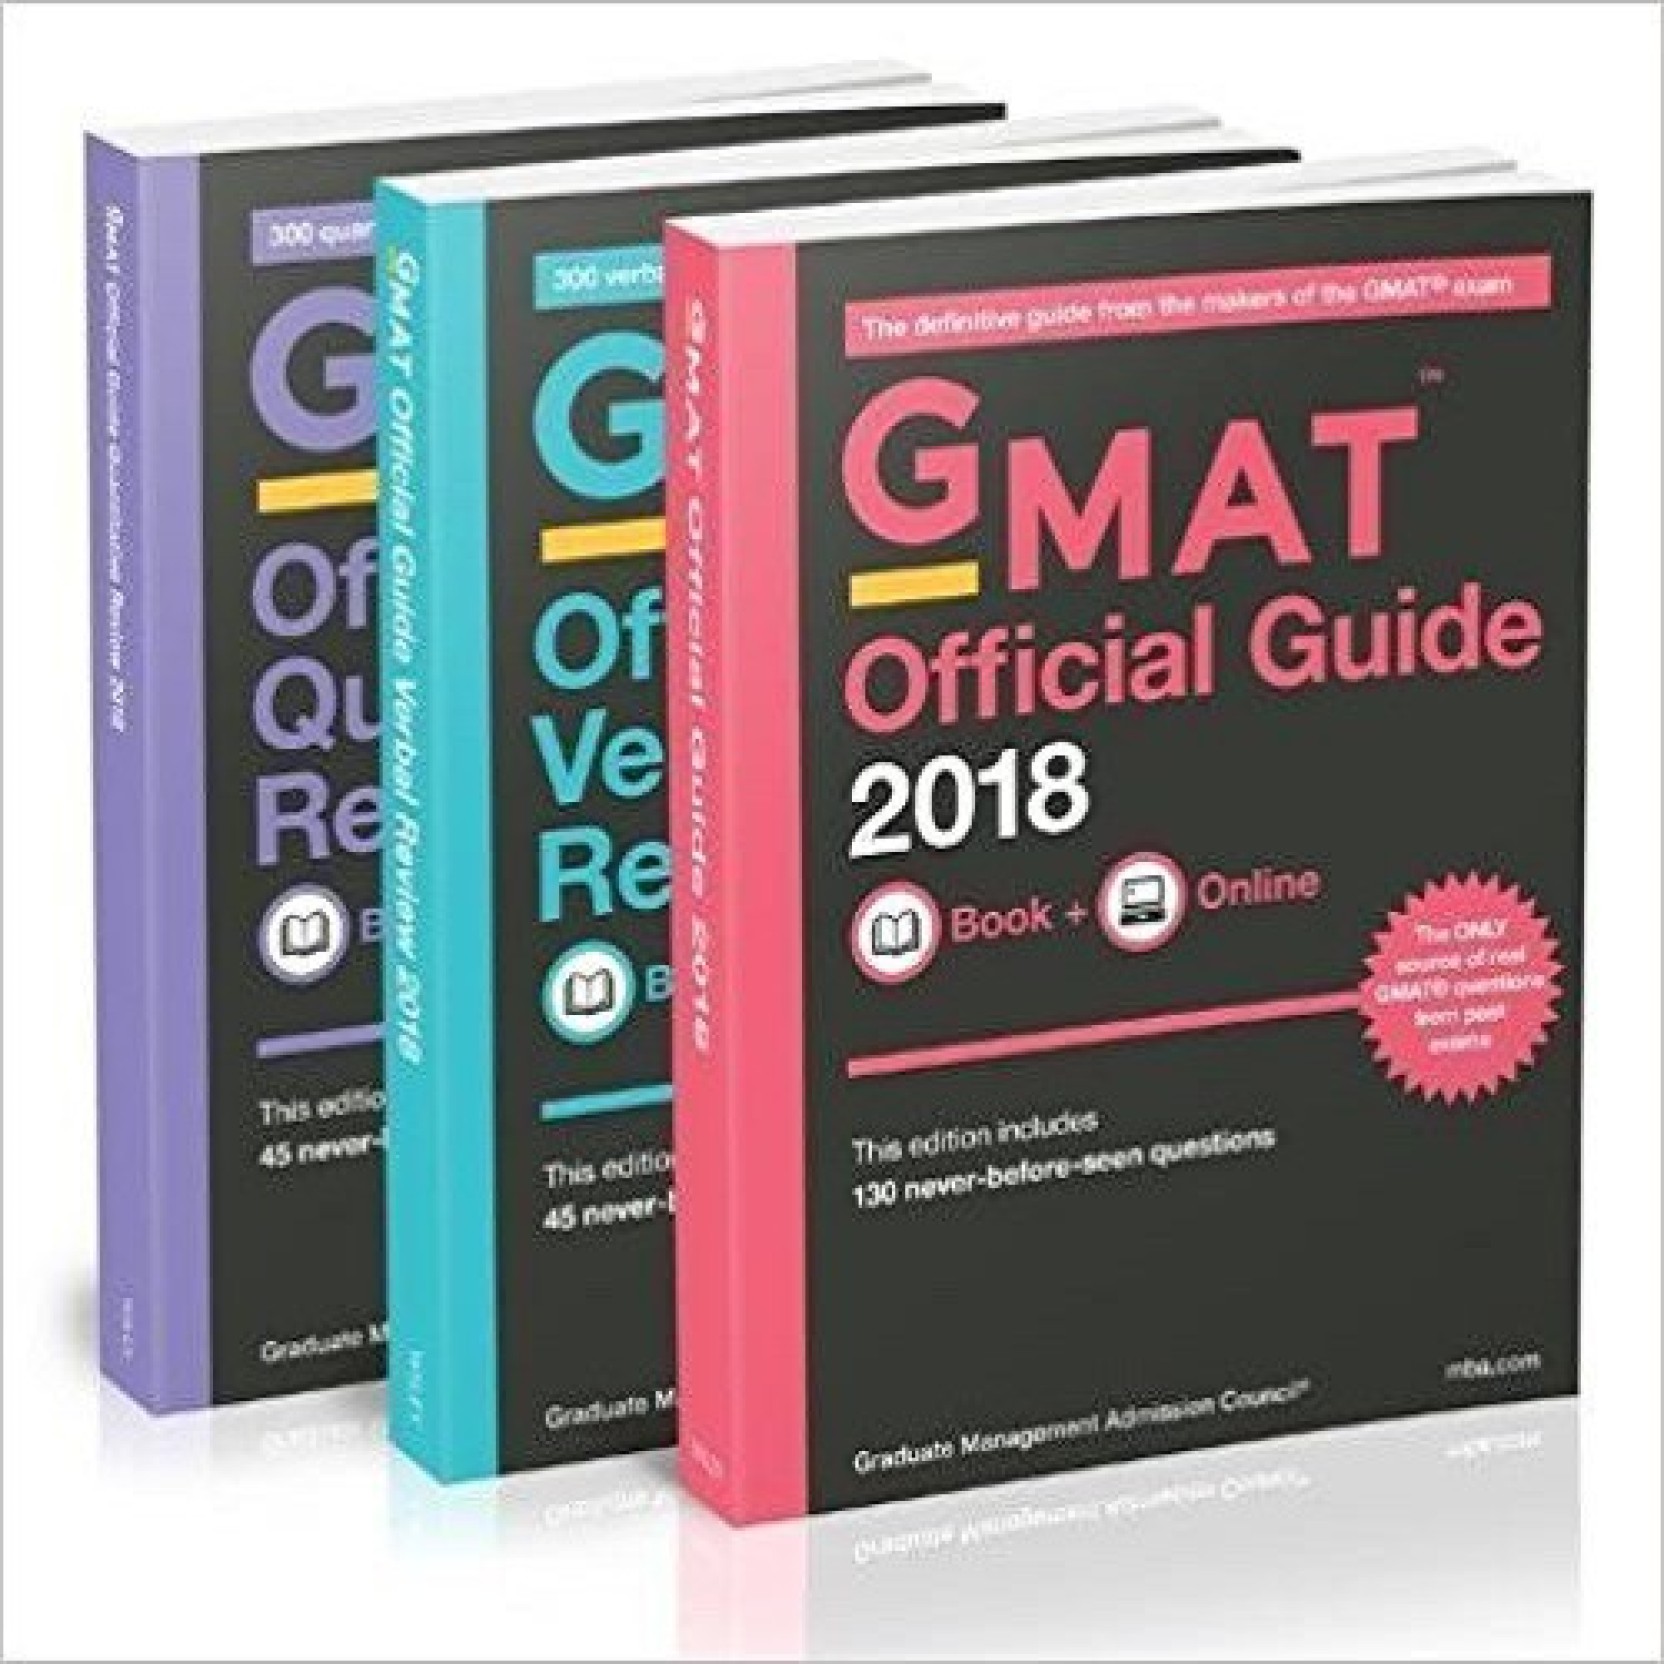 GMAT Official Guide 2018 Bundle: Books + Online - Buy GMAT Official Guide 2018 Bundle: Books